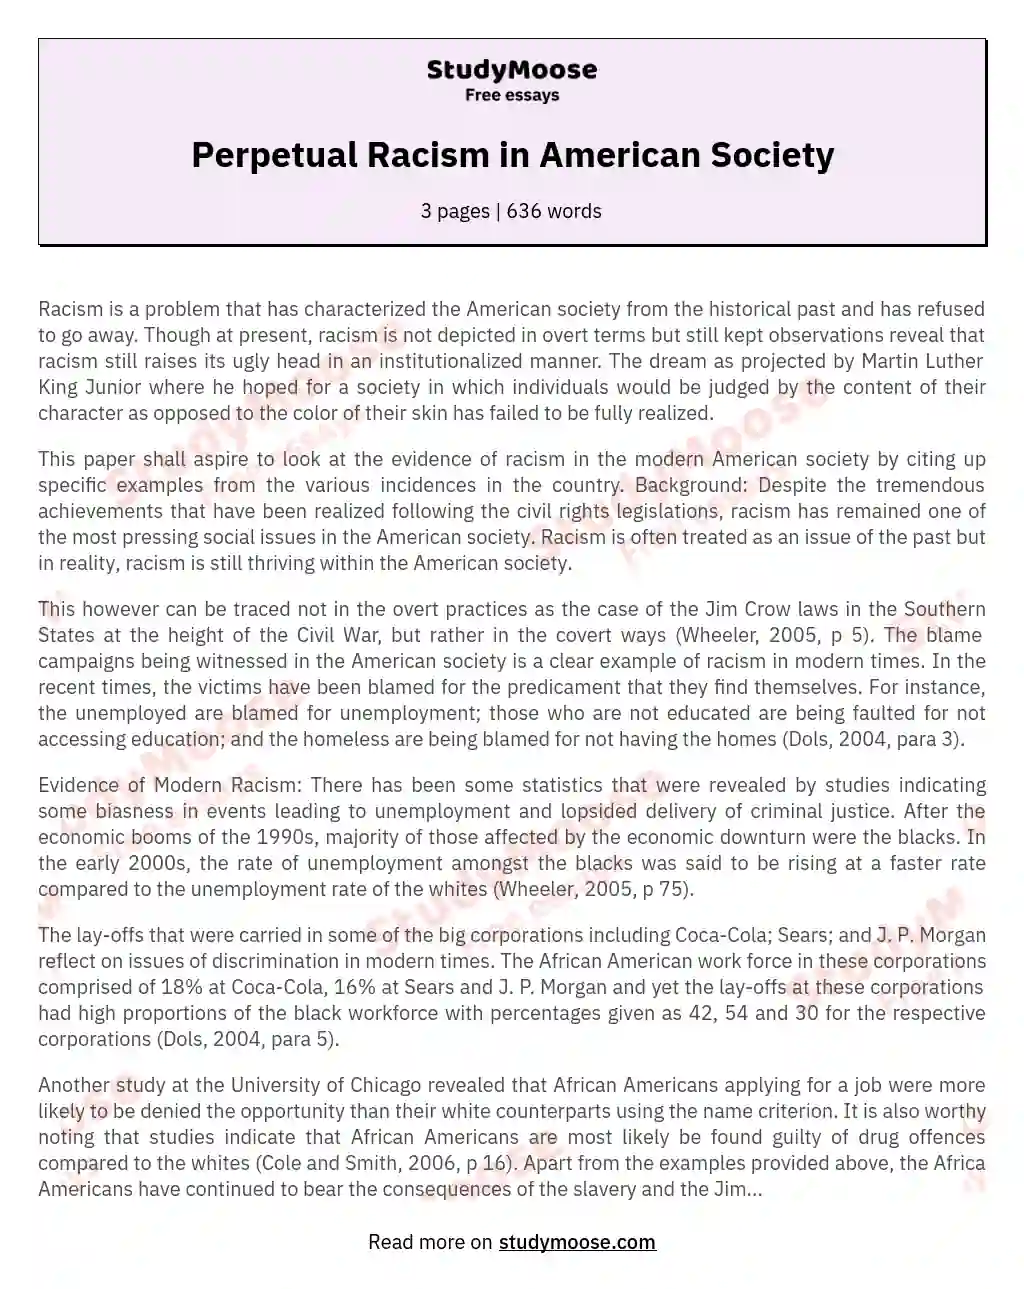 Perpetual Racism in American Society essay